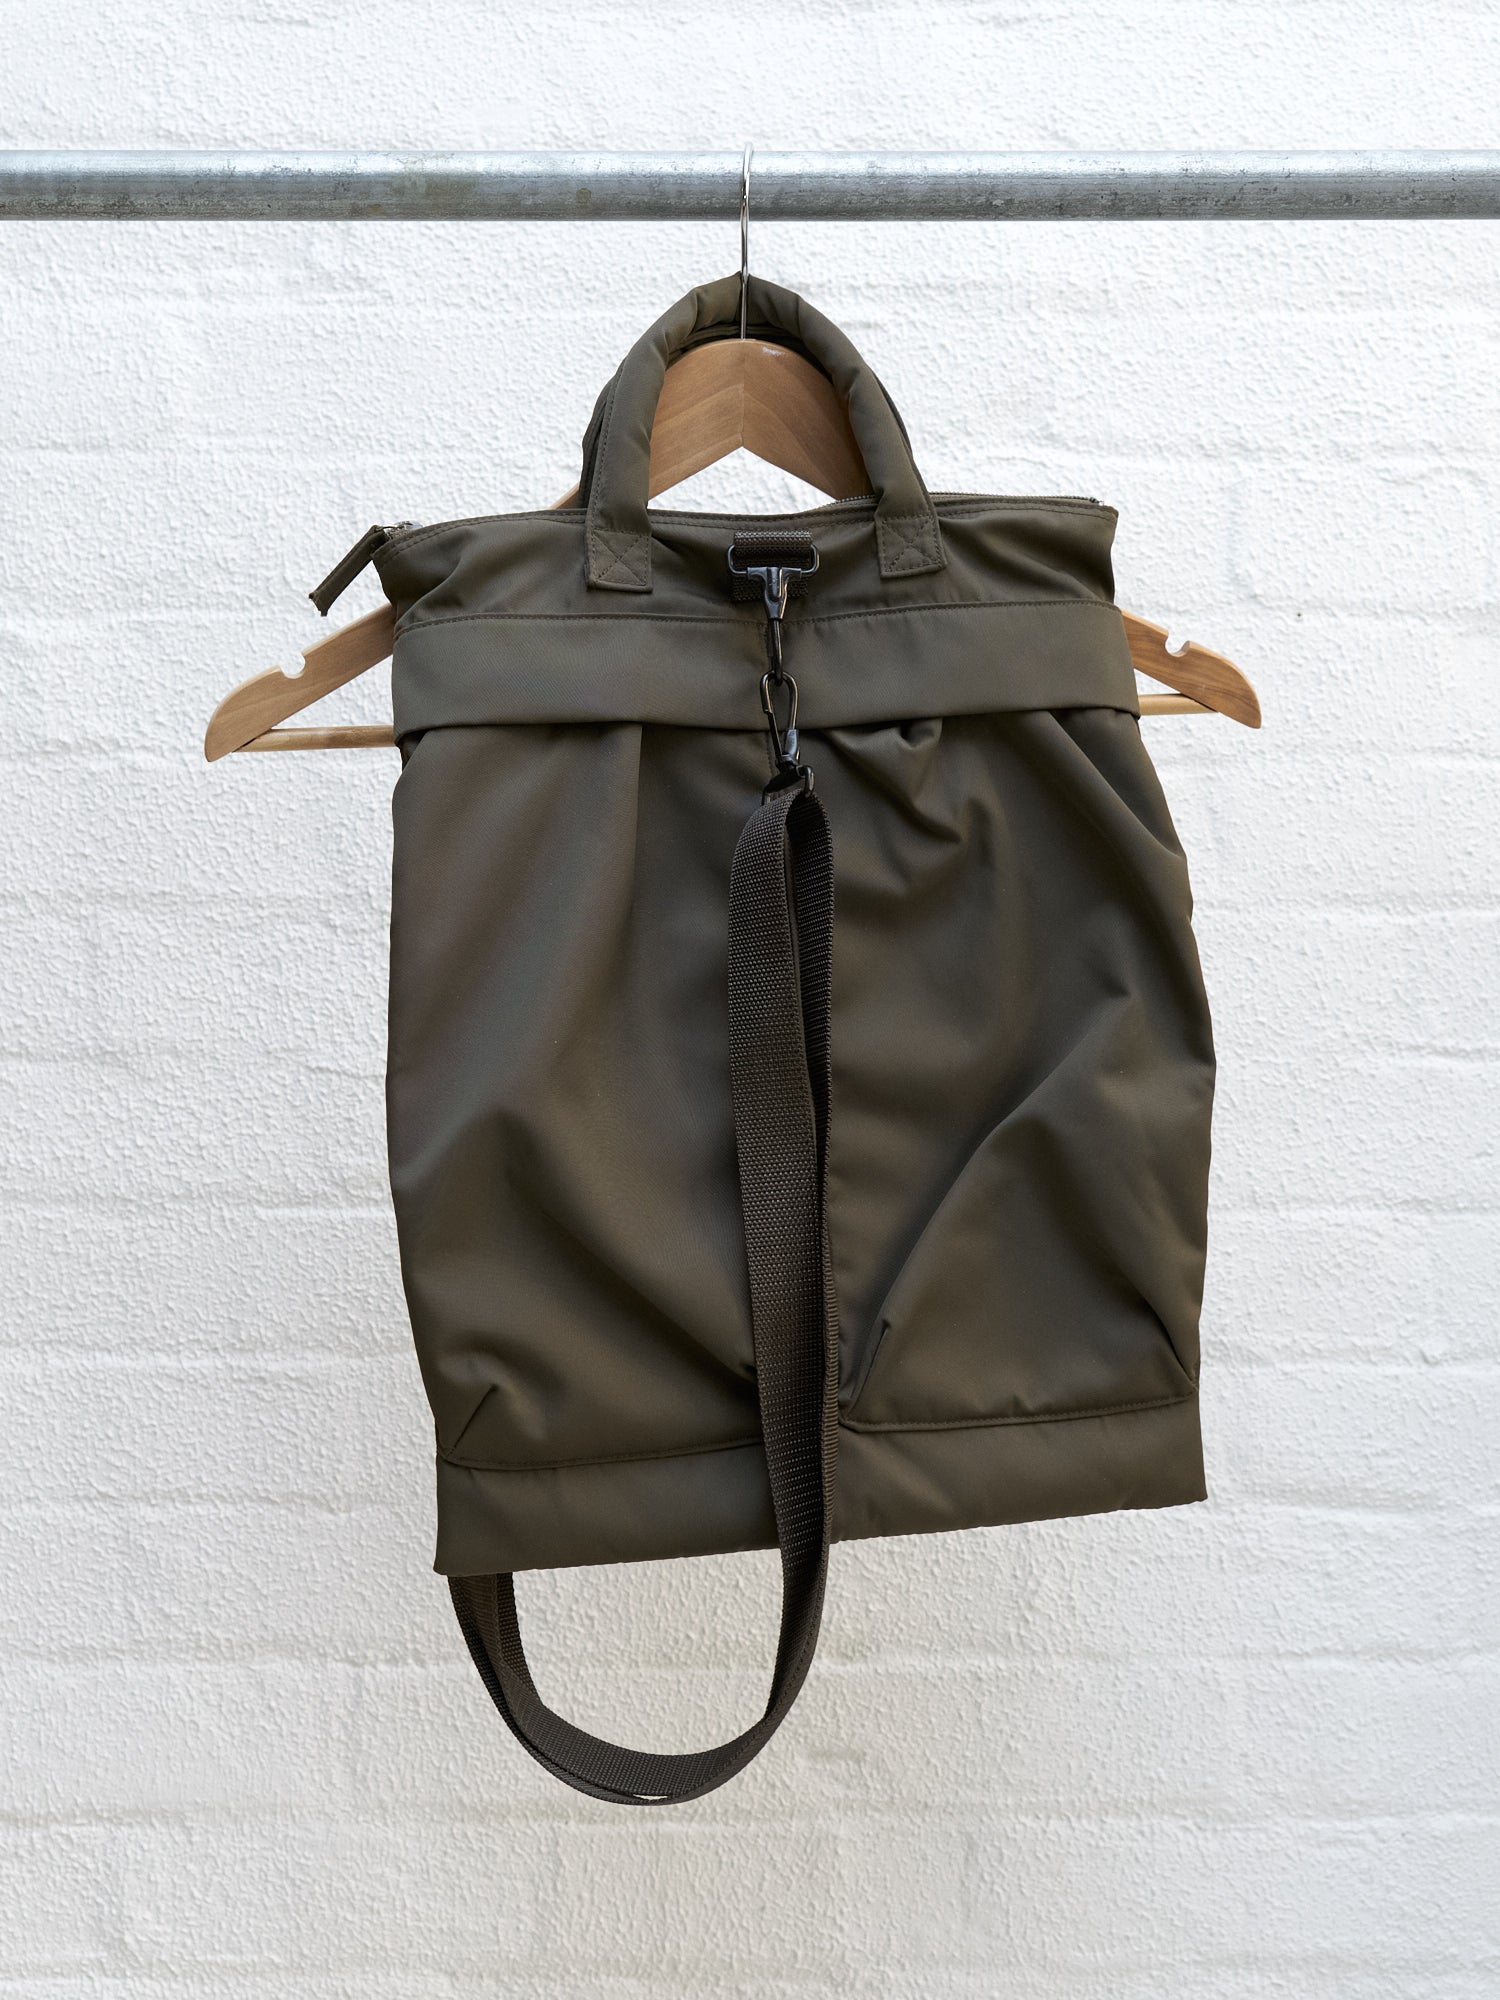 Helmut Lang 1990s-2000s khaki nylon twill shoulder bag